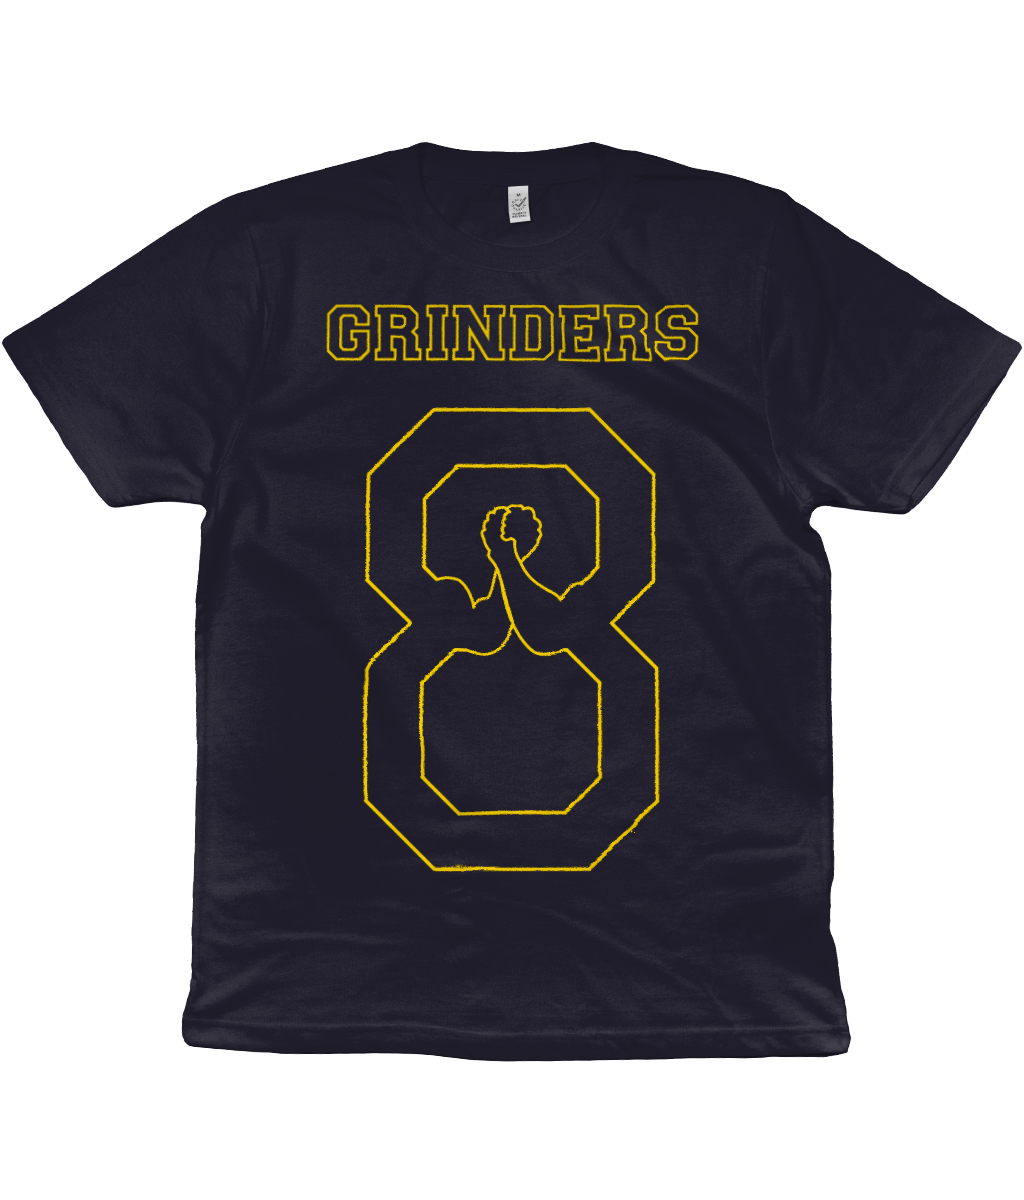 Team Grinders Organic Cotton T-shirt